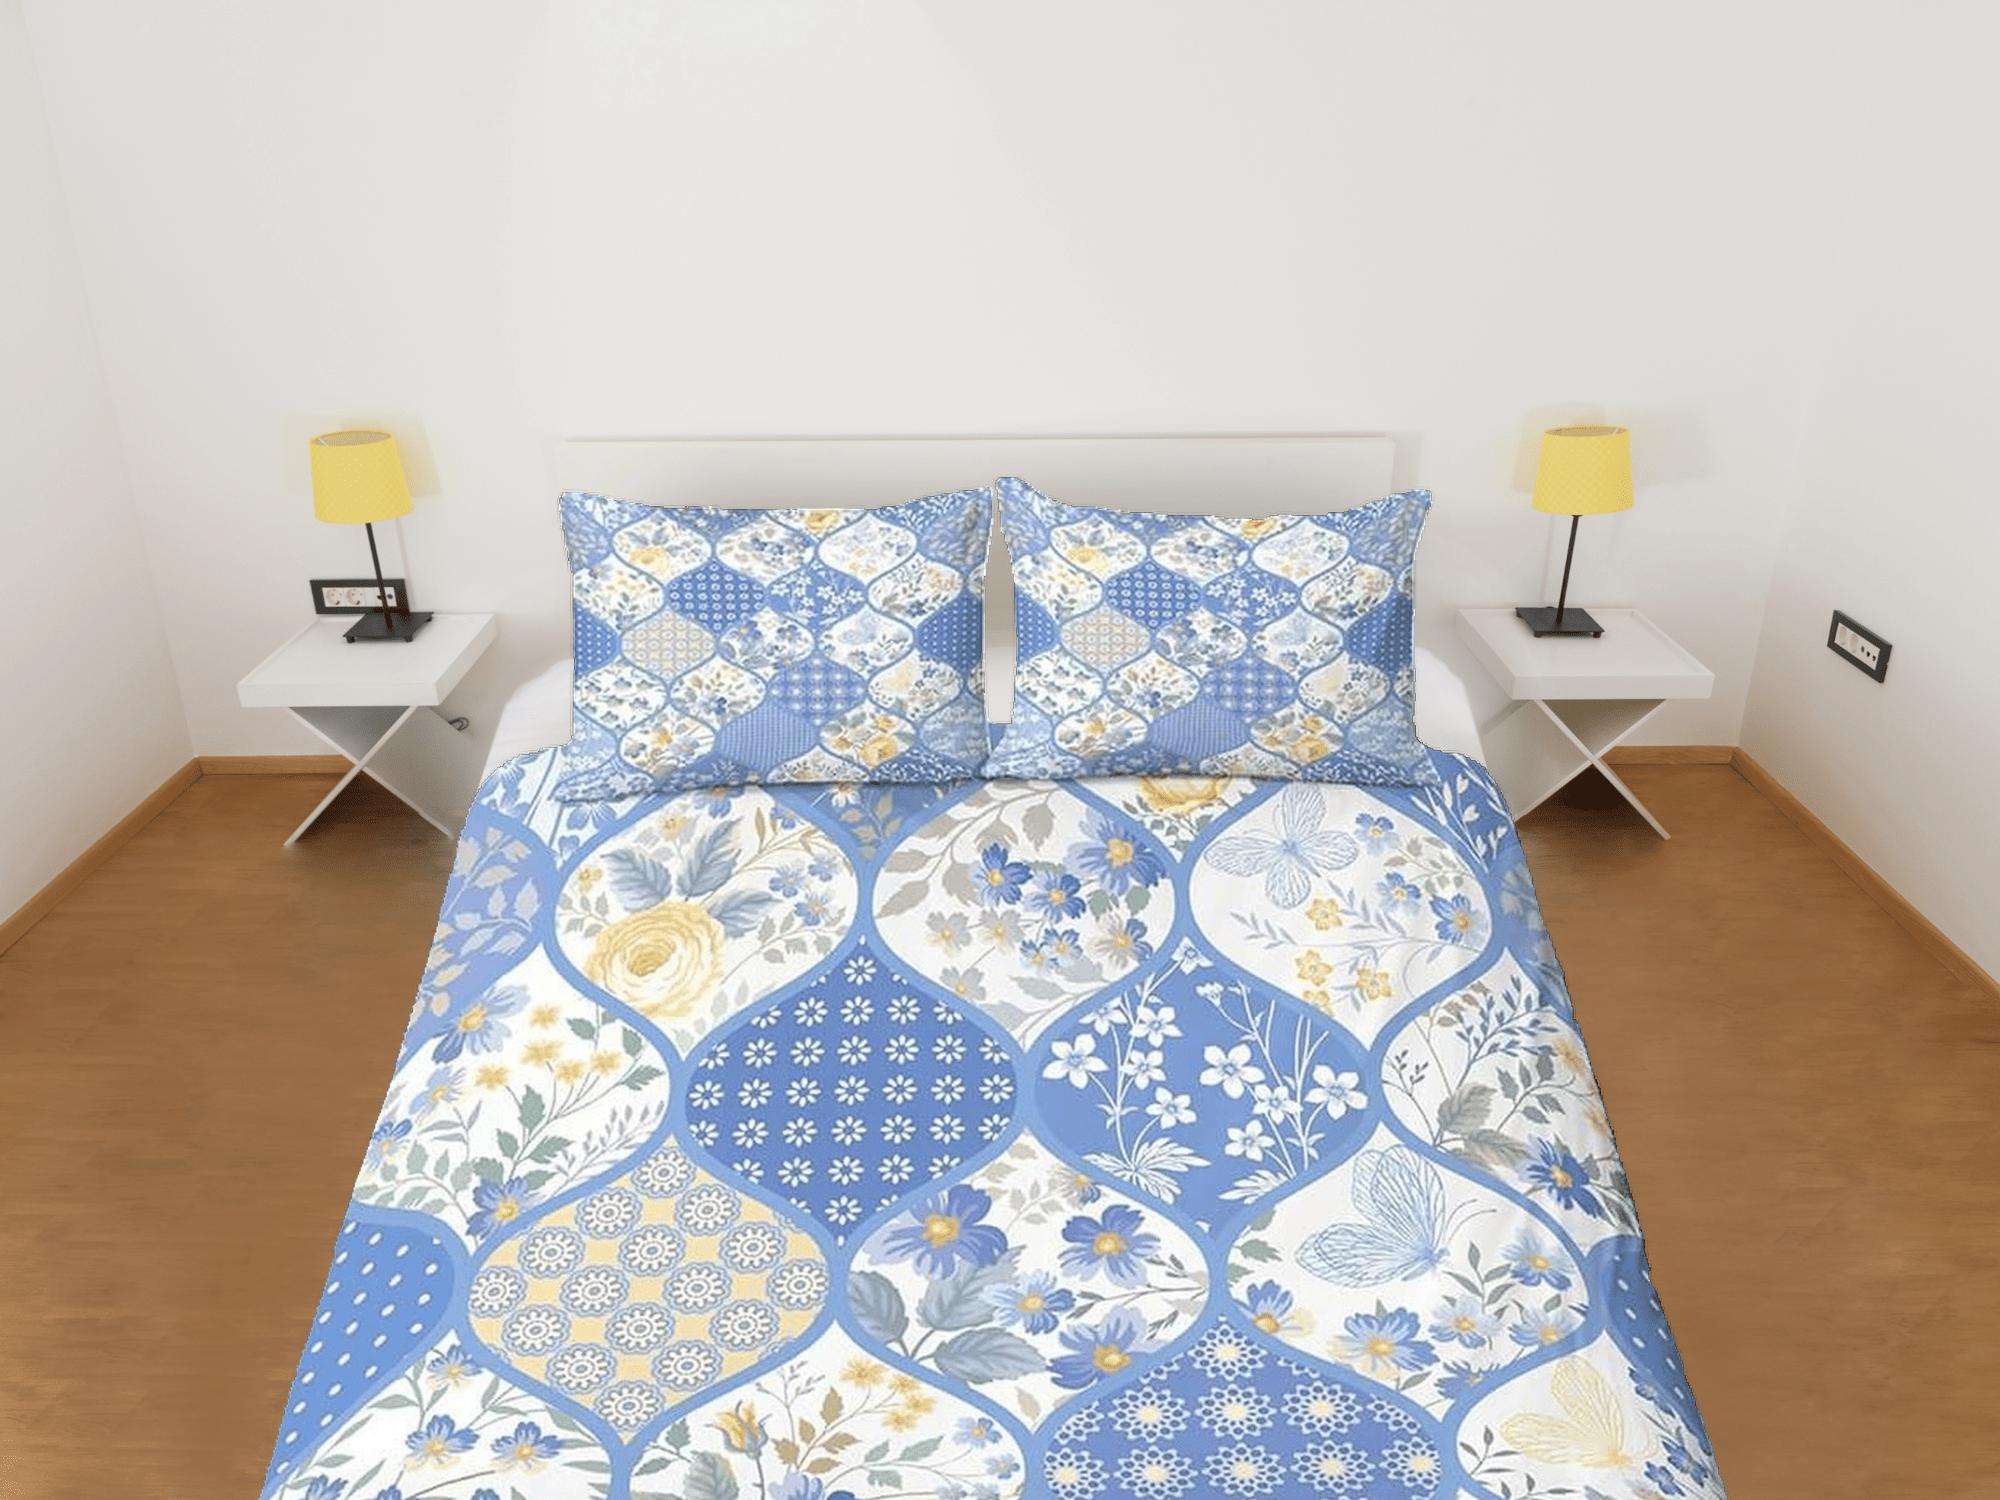 daintyduvet Blue floral patchwork quilt printed duvet cover set, aesthetic room decor bedding set full, king, queen size, boho bedspread shabby chic